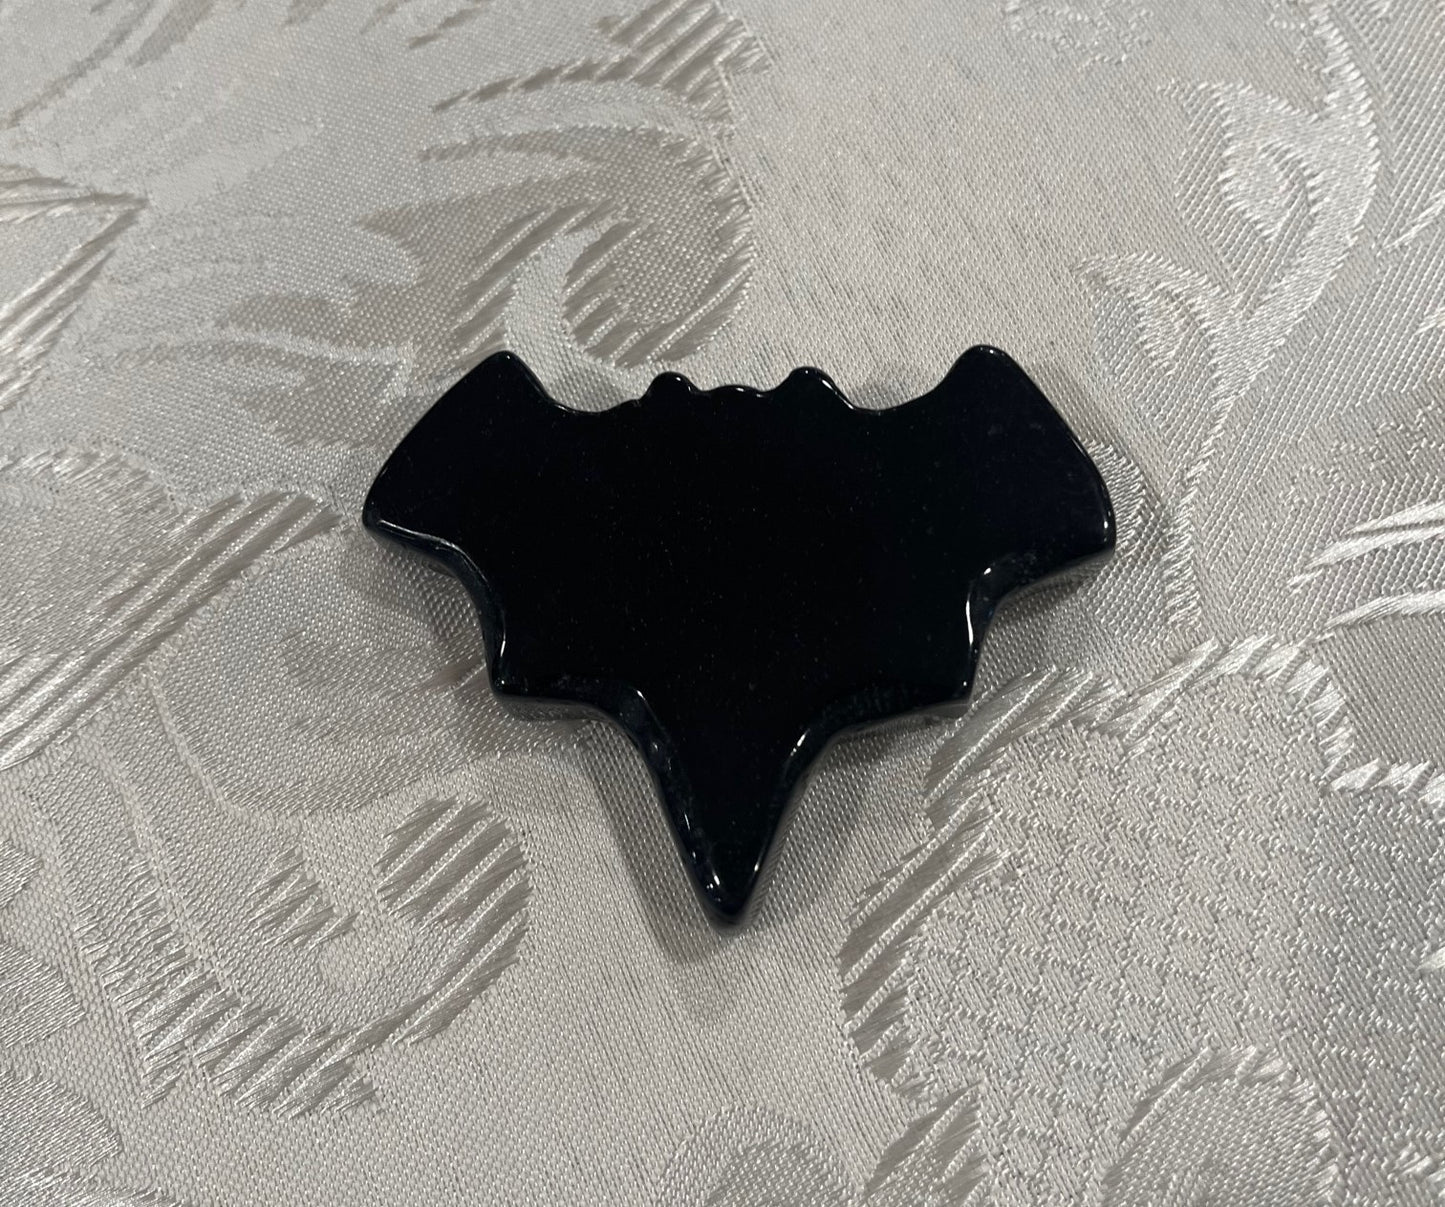 Vampire Bat crystal/stone carving